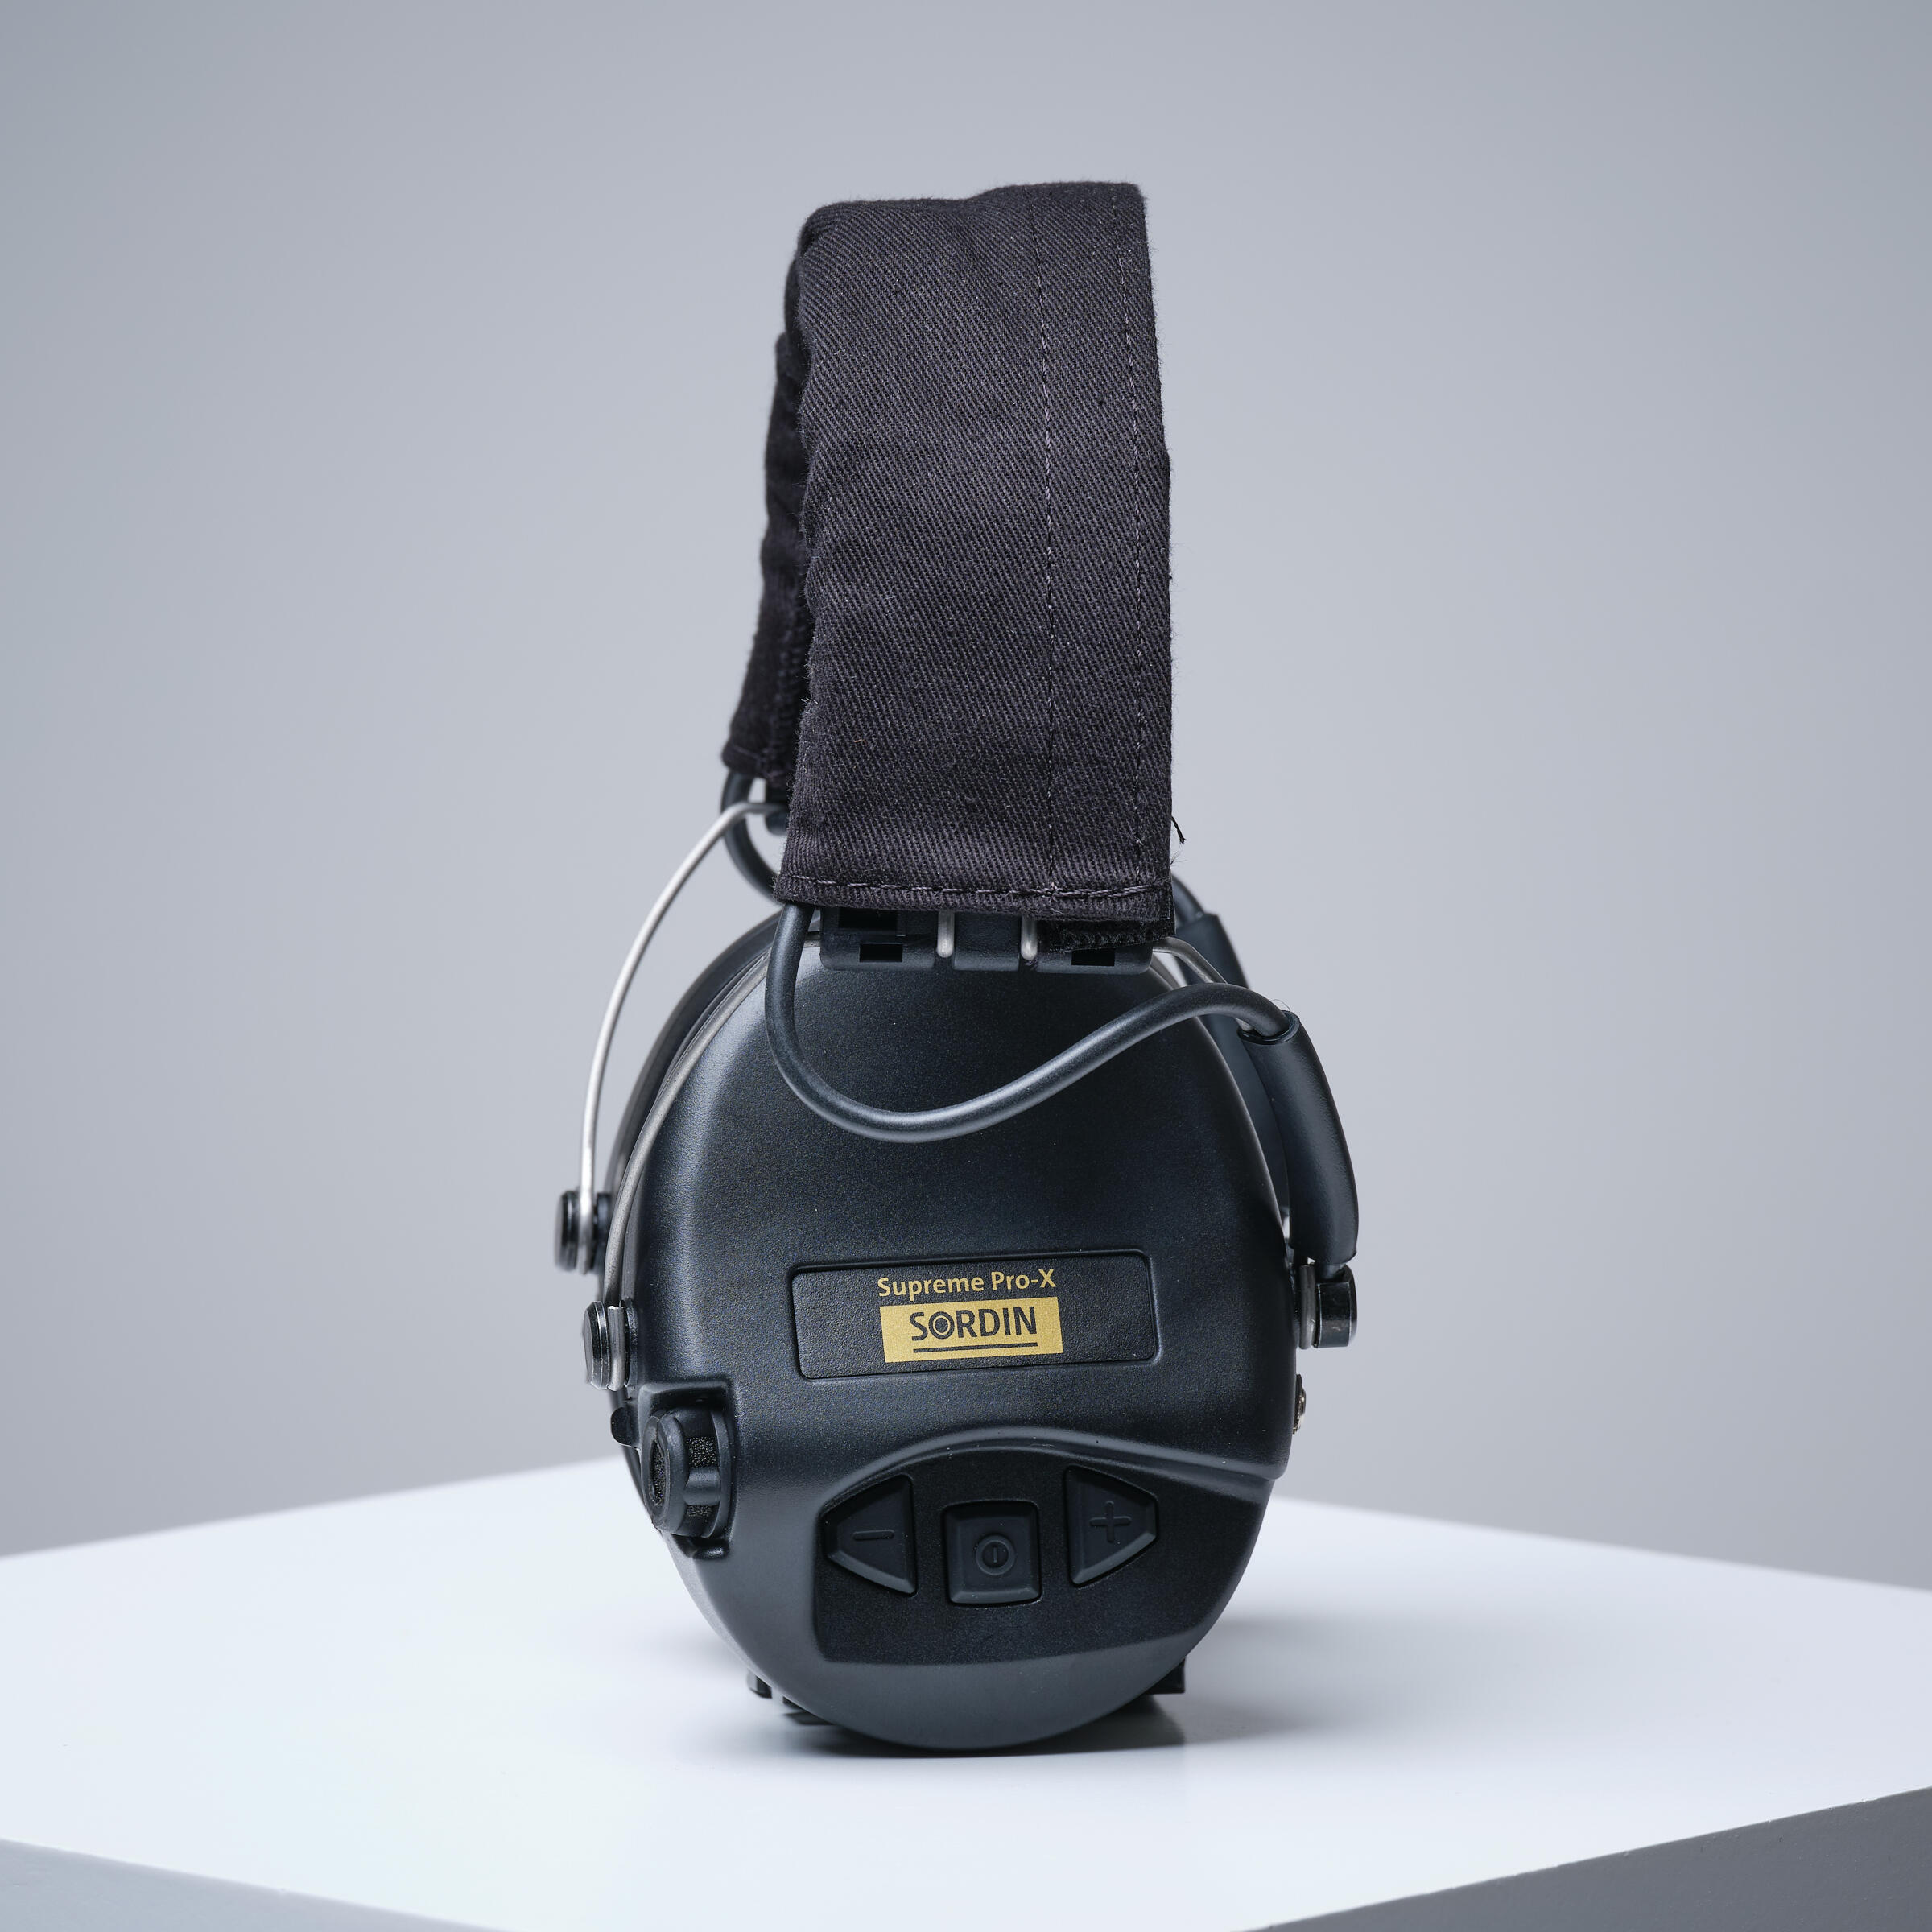 Electronic Hearing Protection Headset Sordin Supreme Pro-X black 2/7